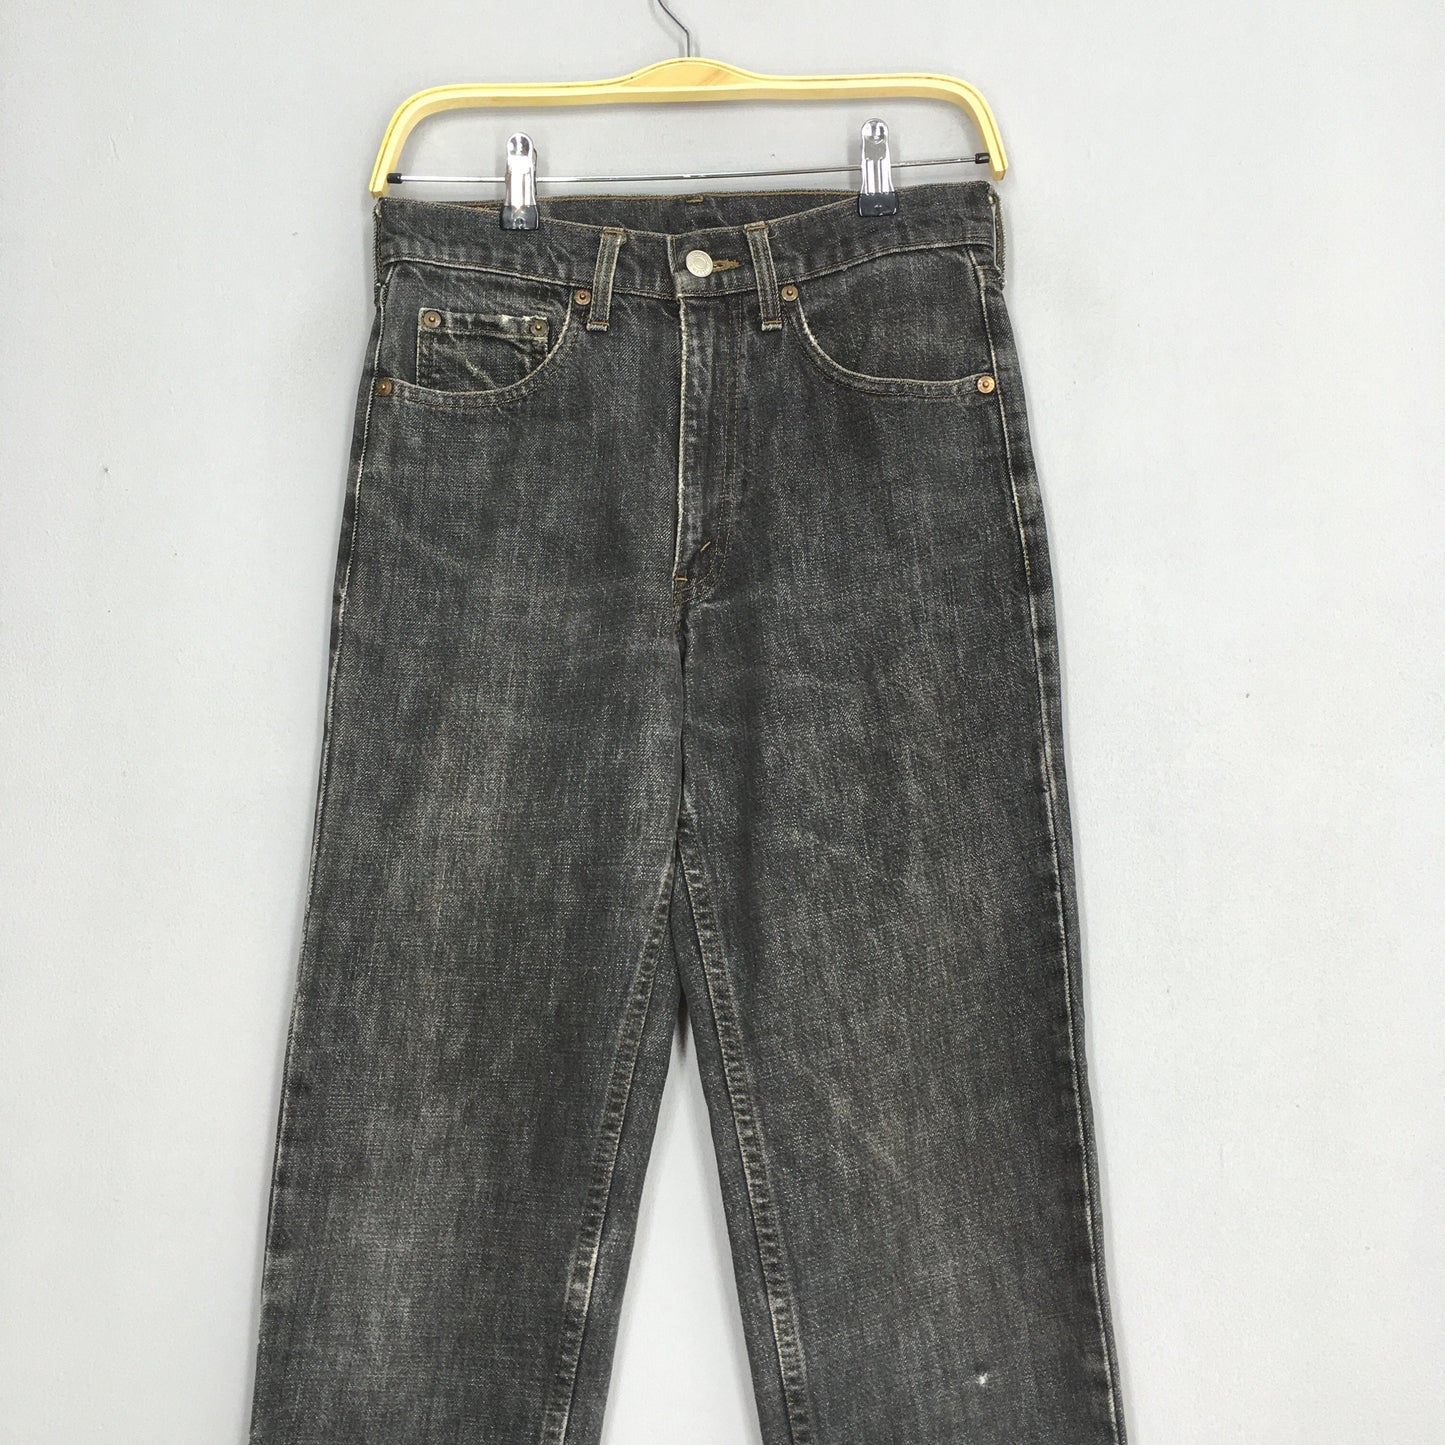 Levi's 603 Black Jeans Stone Washed Size 28x28